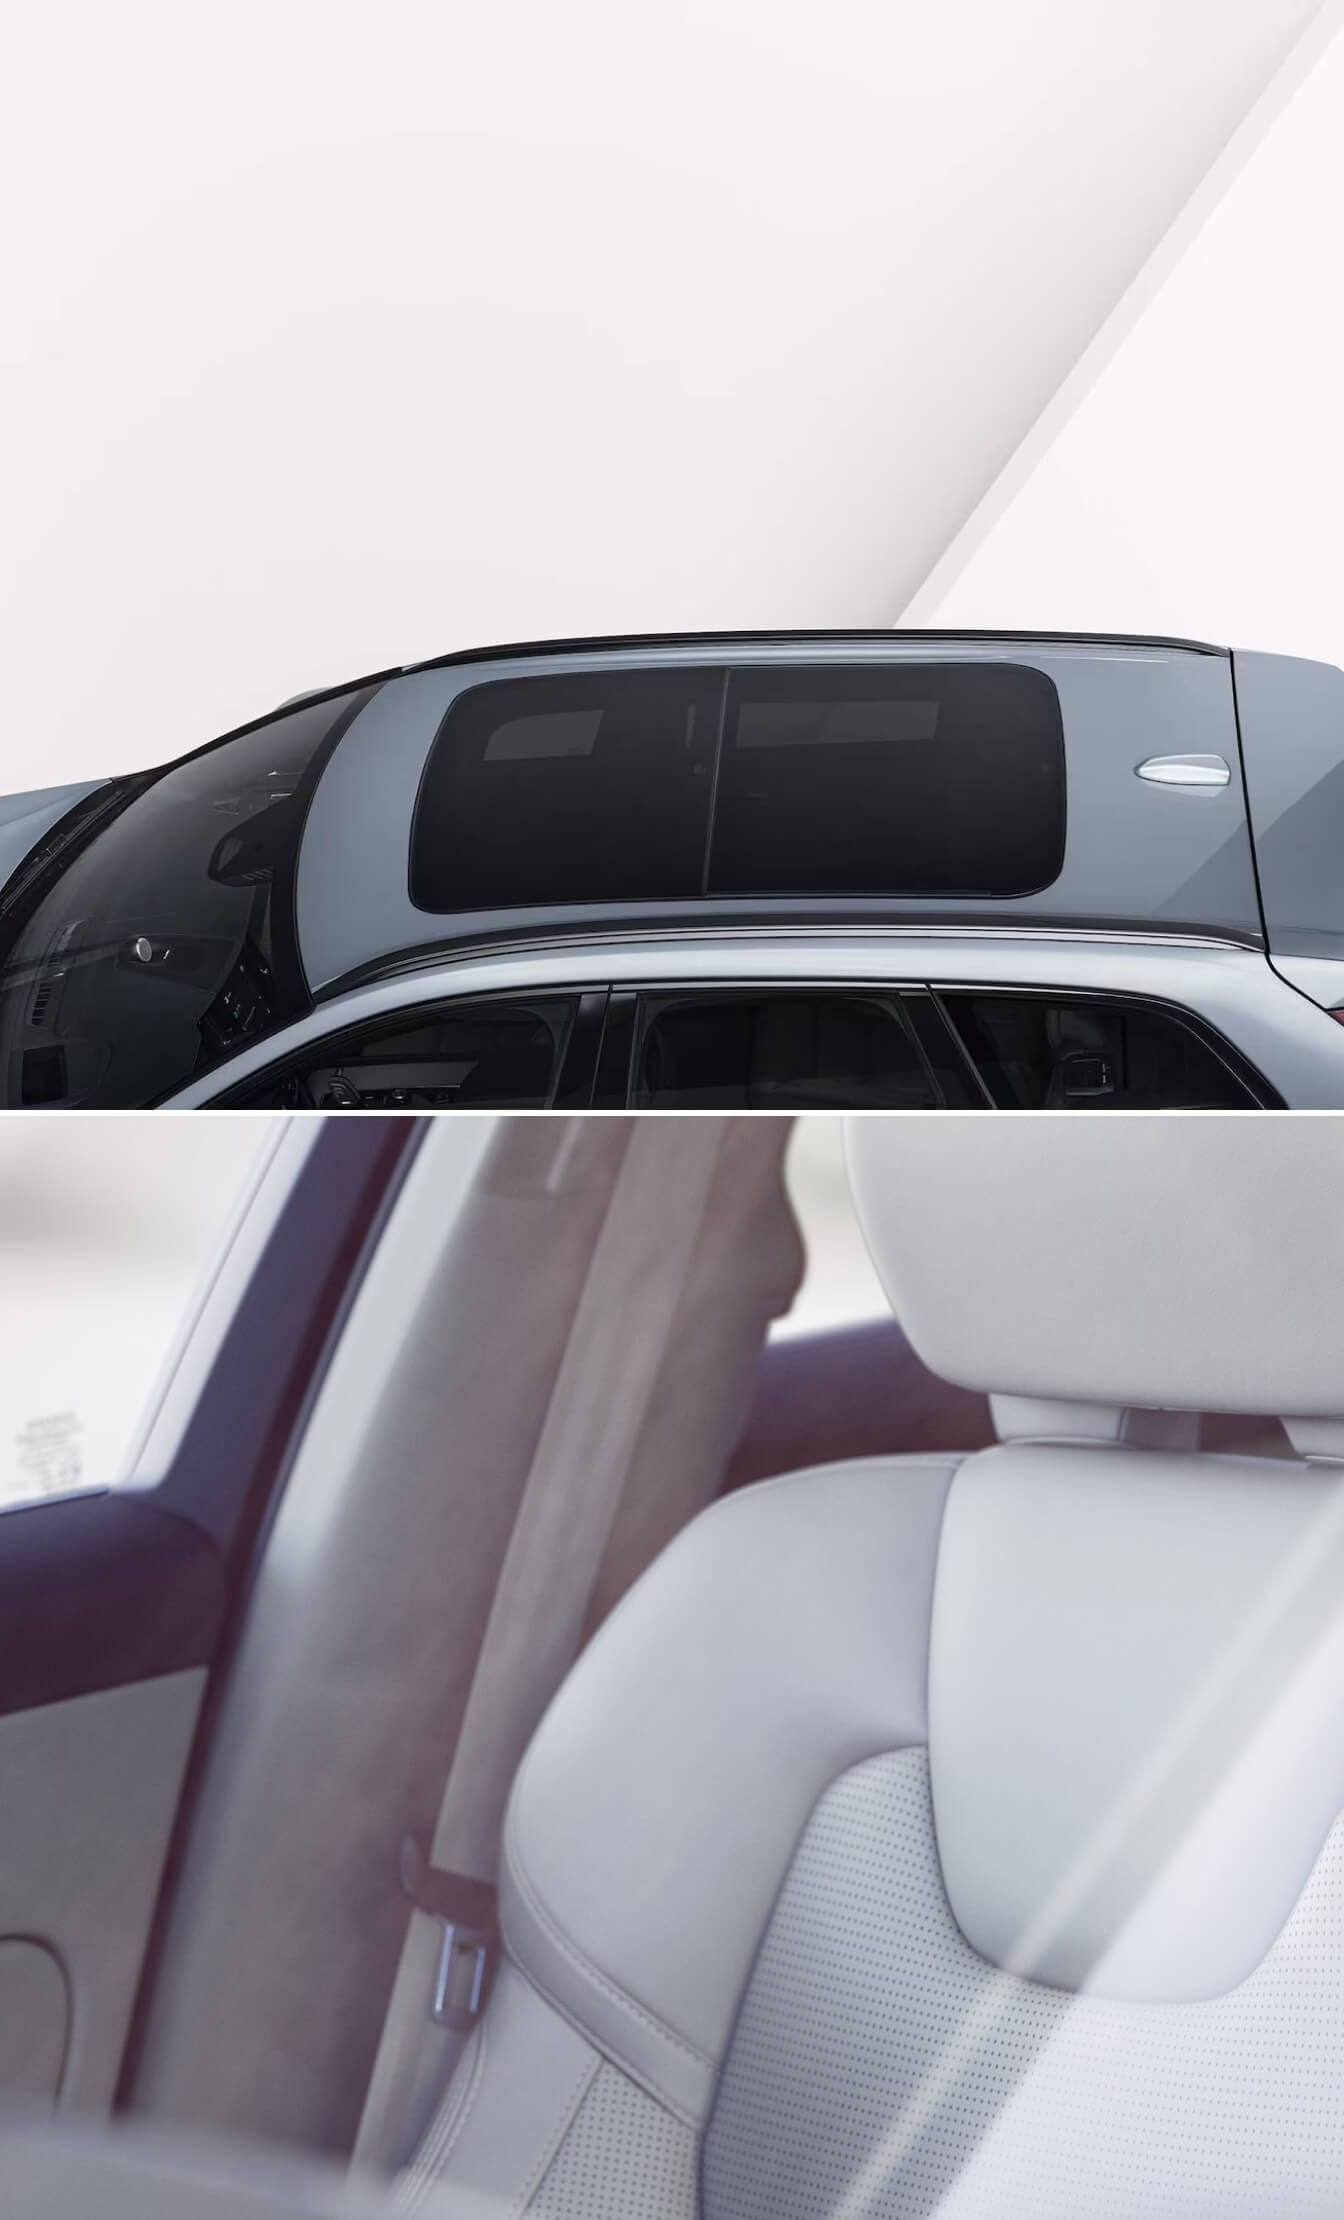 Volvo XC60 Interior: Trim-Level Differences